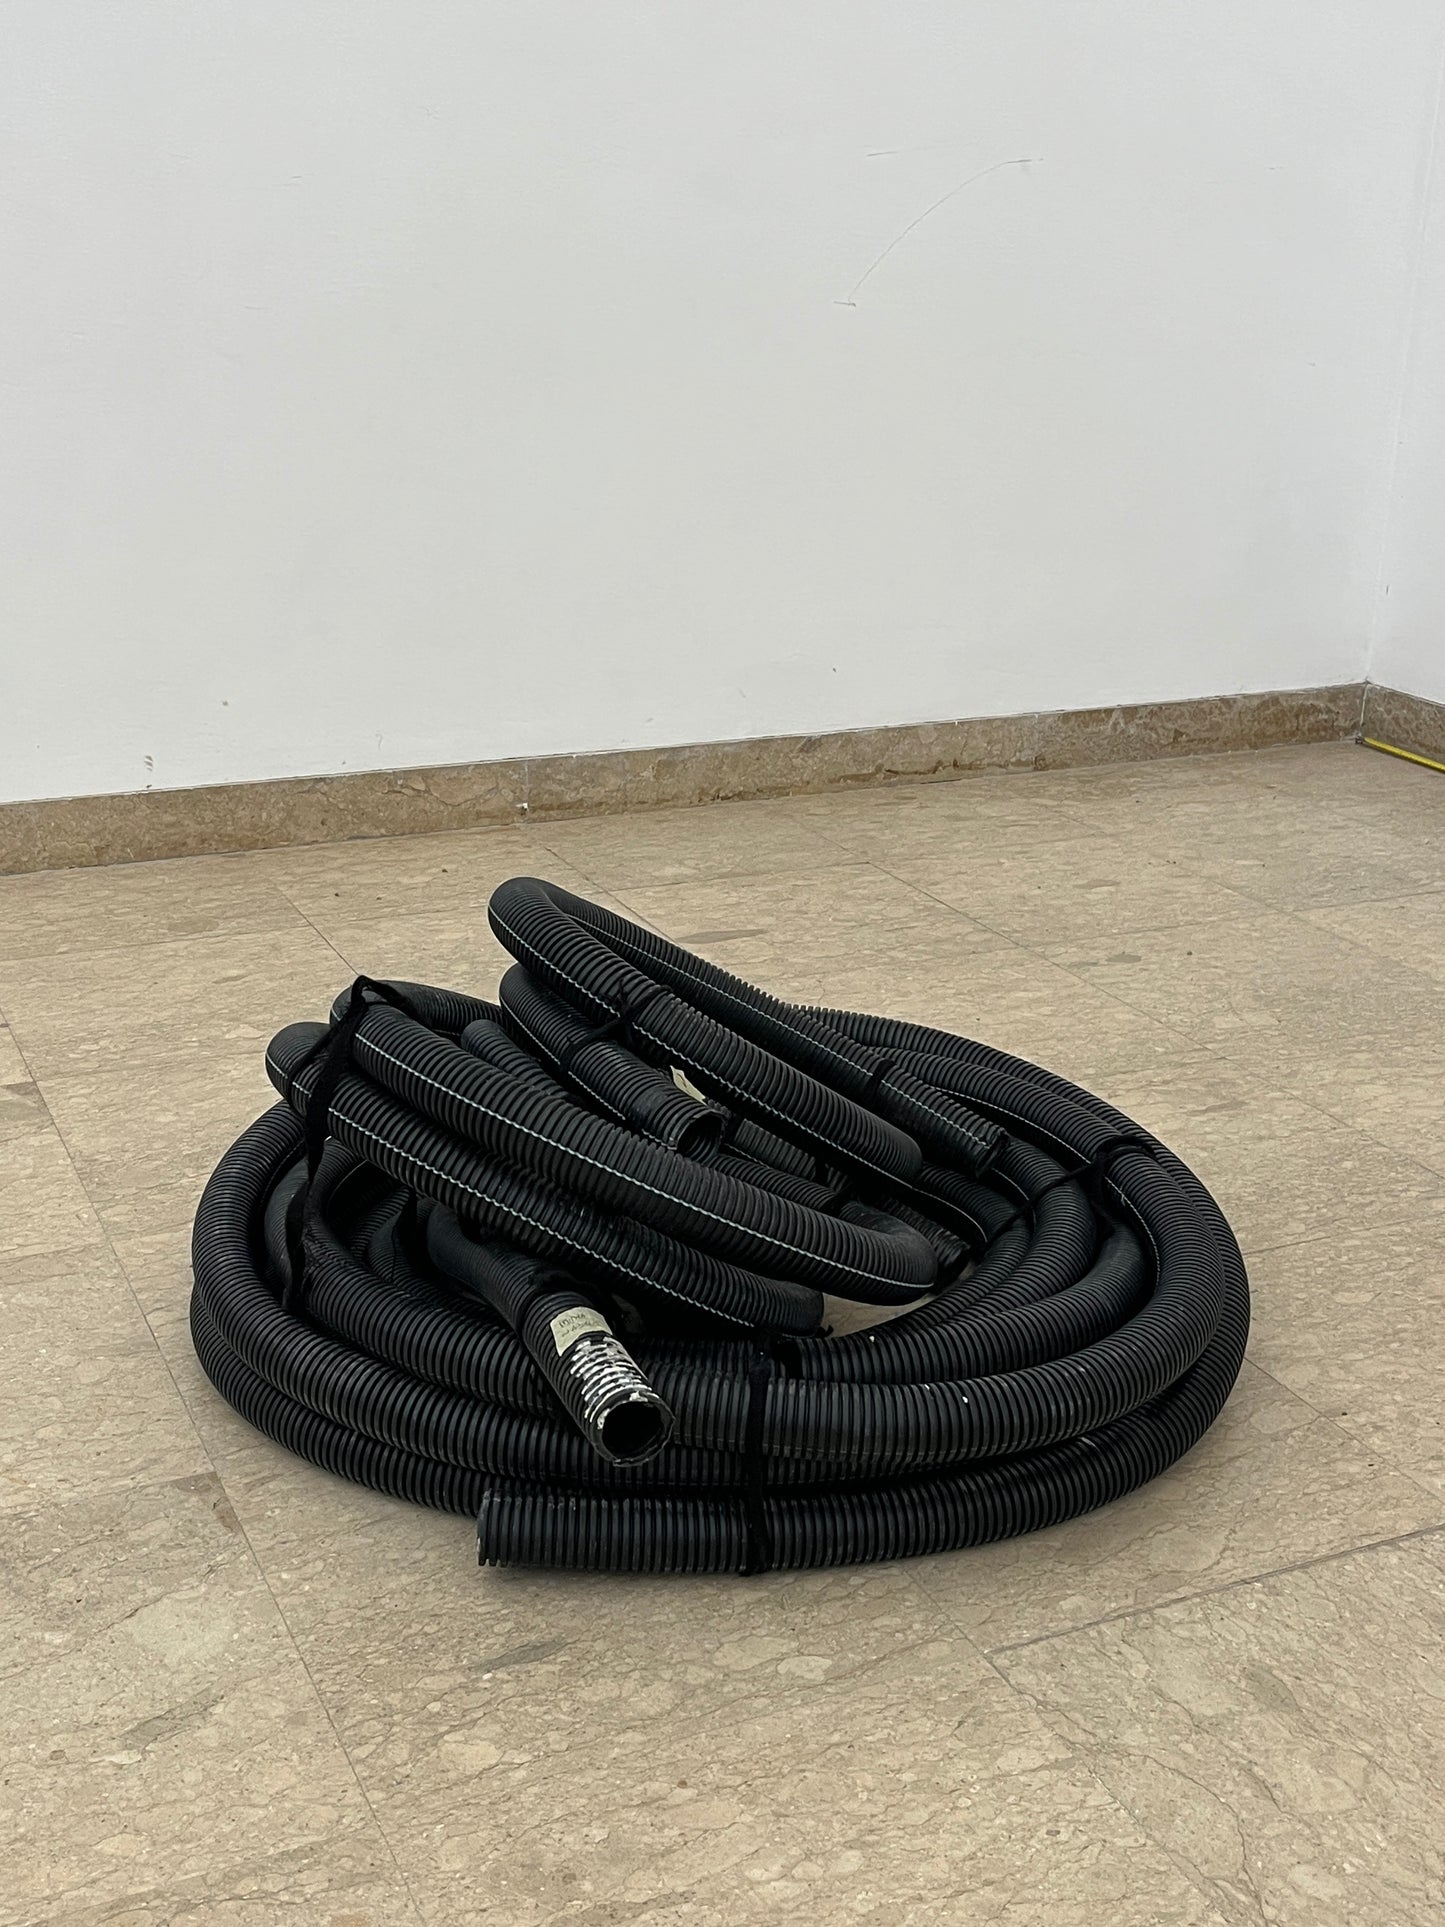 Italian Pavilion | Black Plastic Pipes, 1.9.16